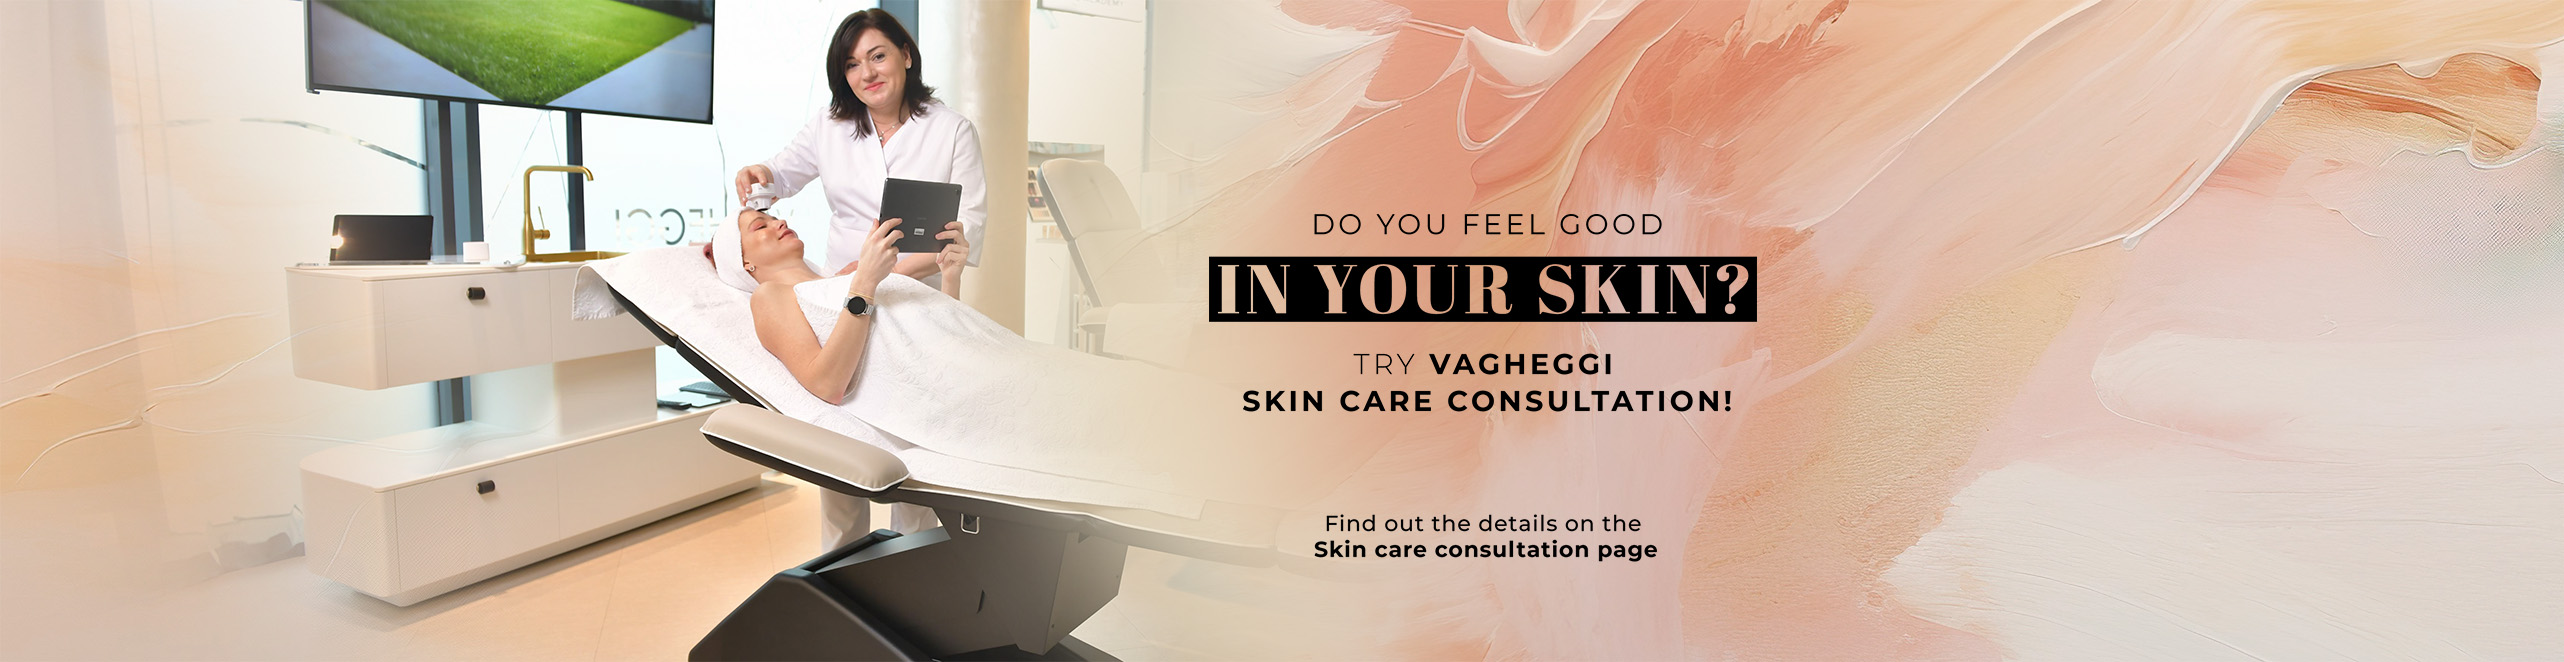 Skin care consultation